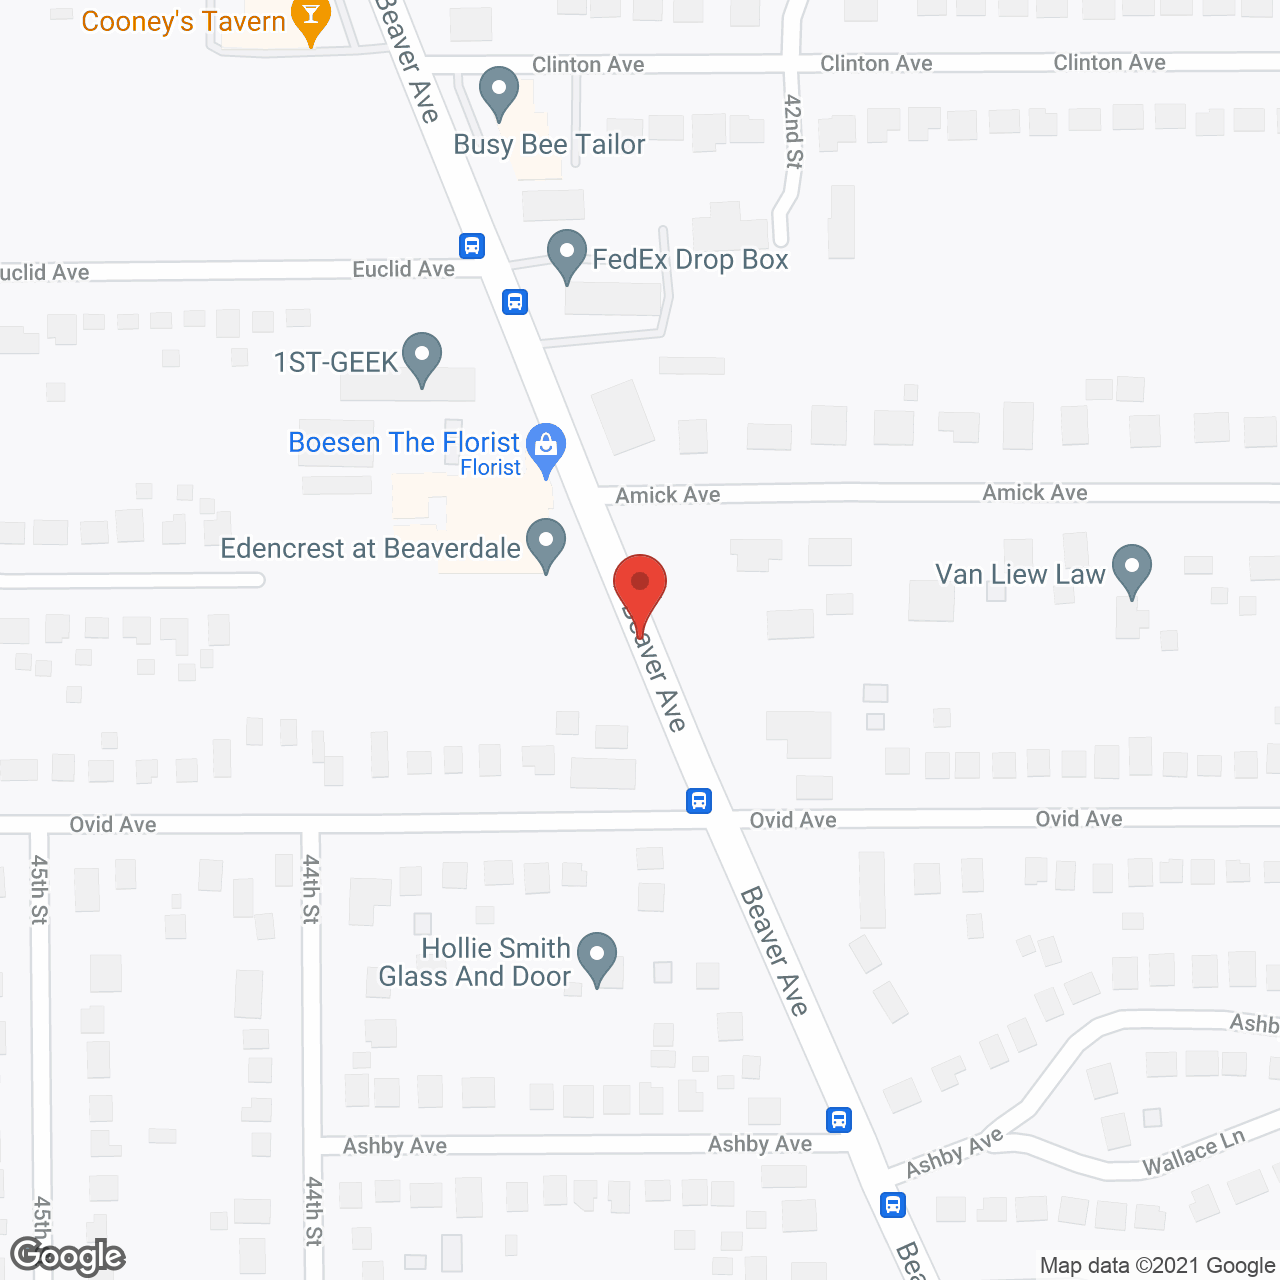 Edencrest at Beaverdale in google map